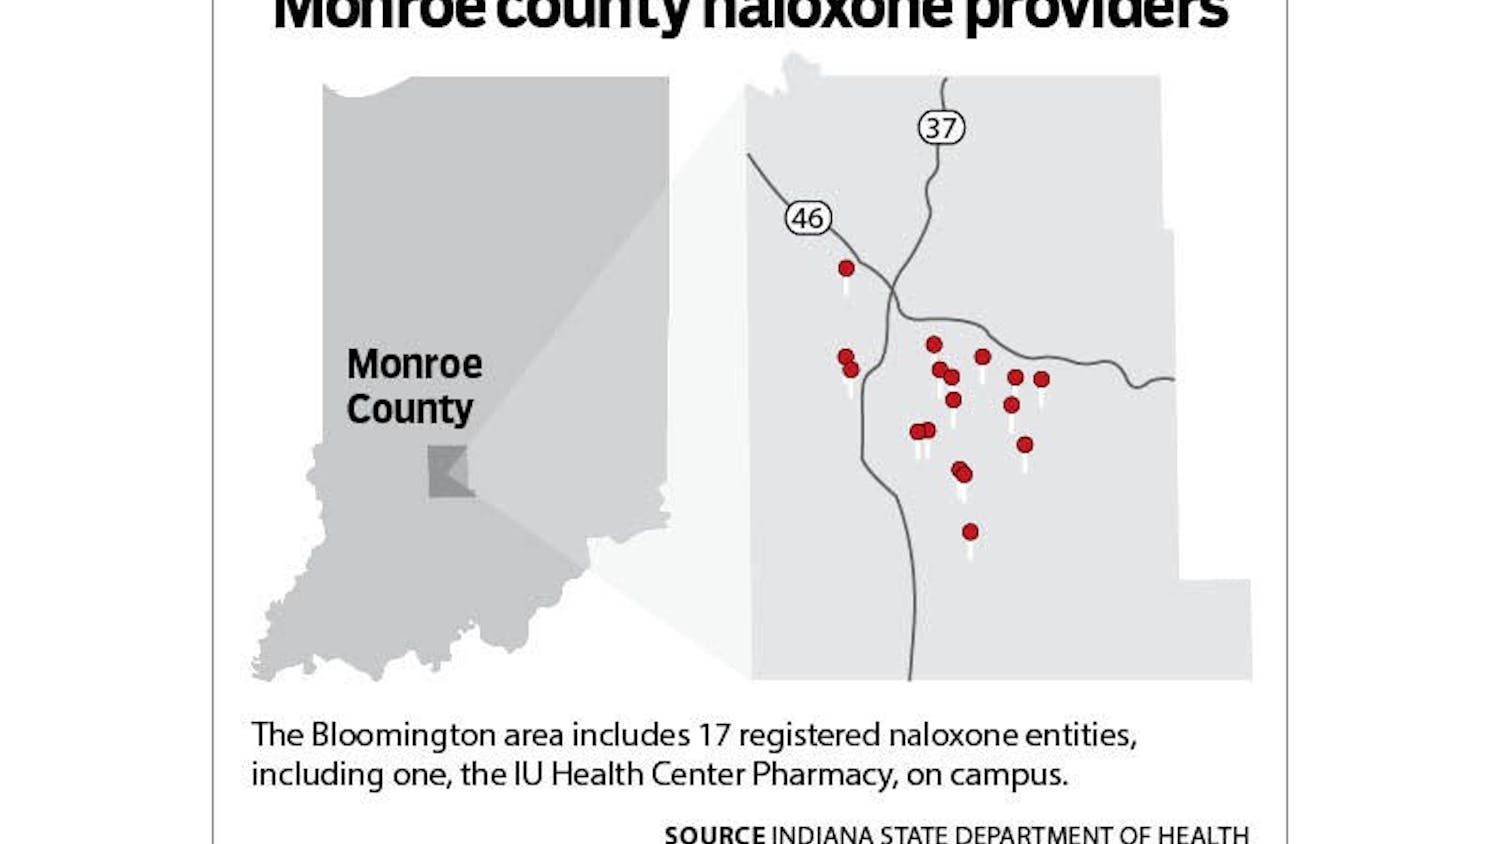 Monroe County naloxone providers